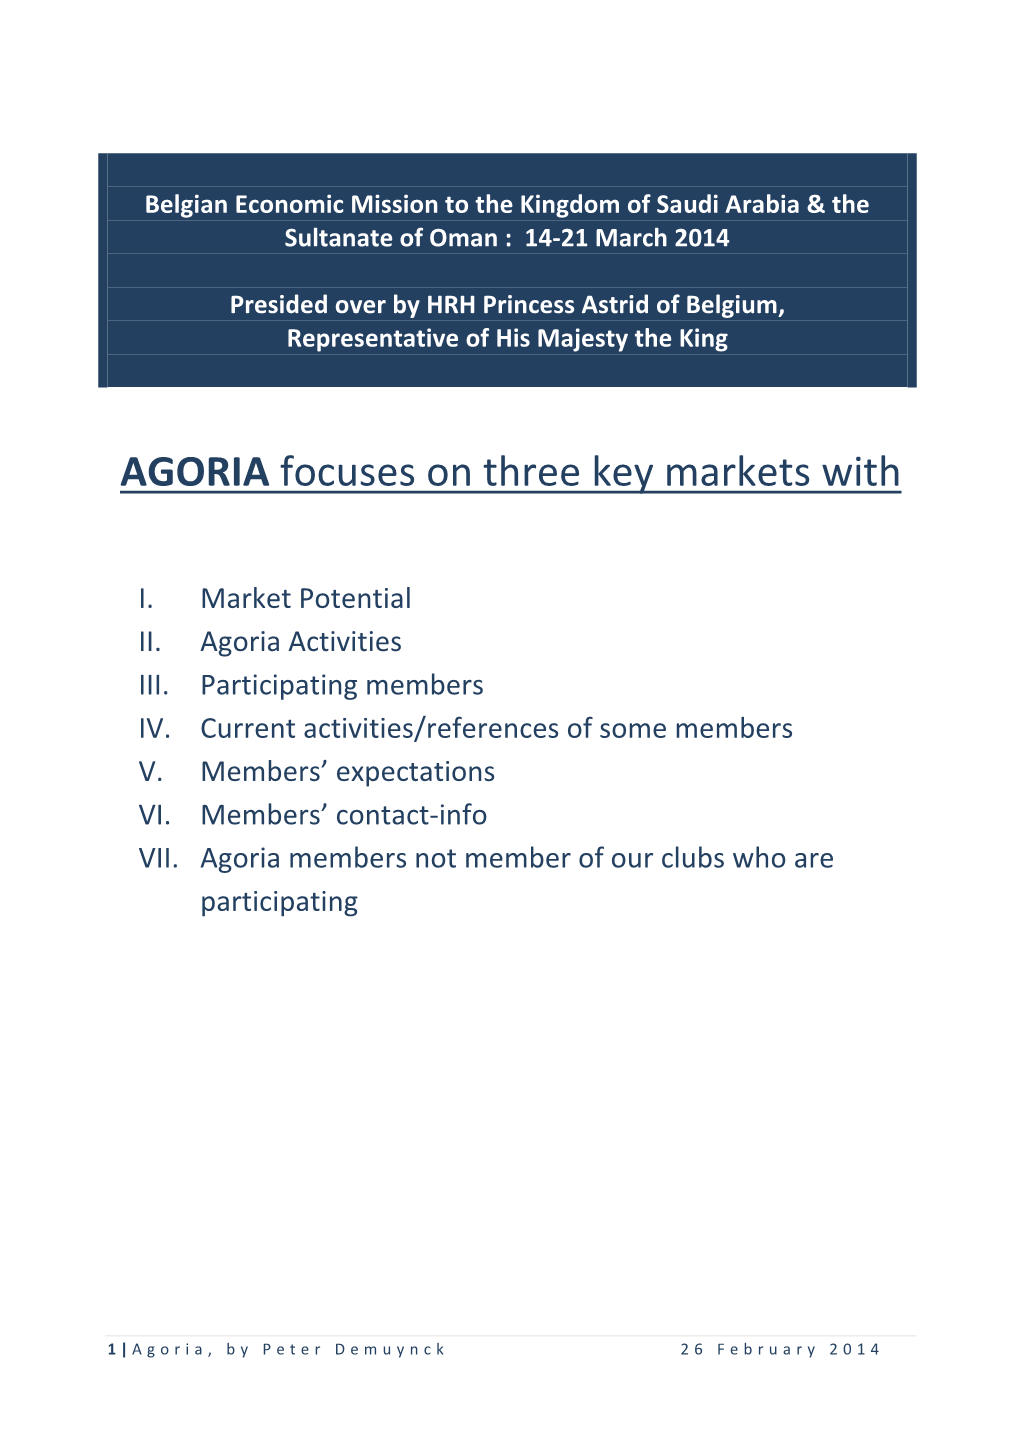 AGORIA Focuses on Three Key Markets With